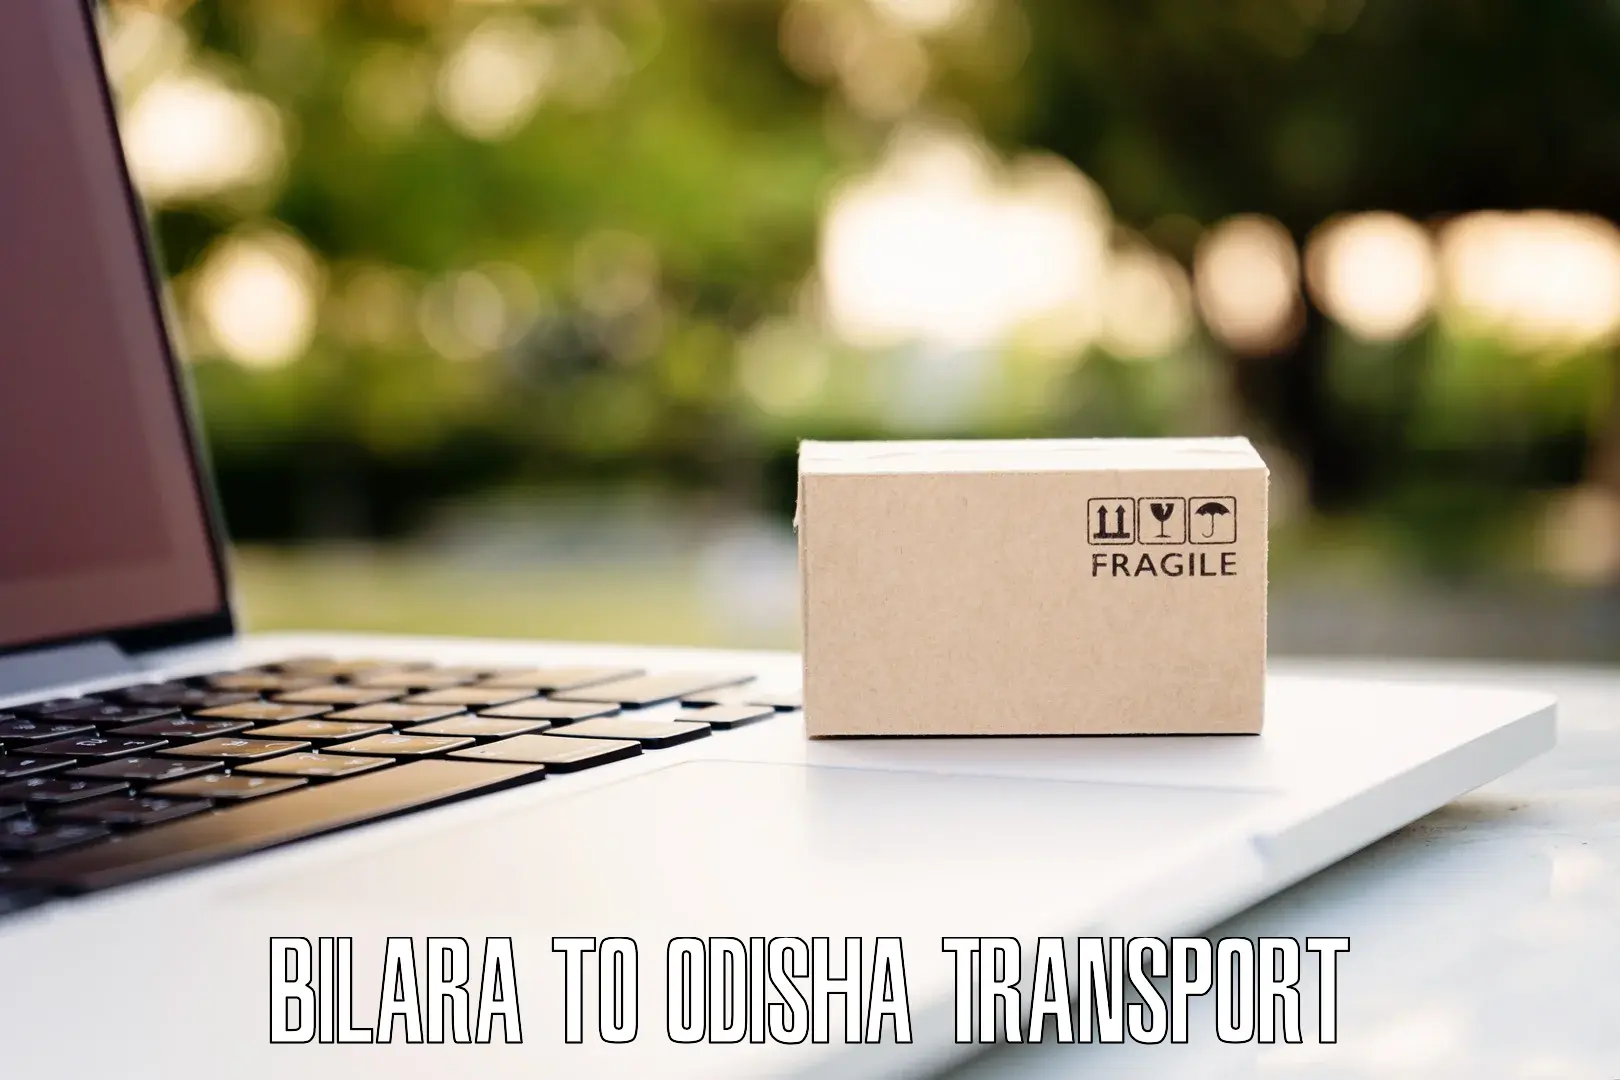 Daily parcel service transport in Bilara to Kesinga